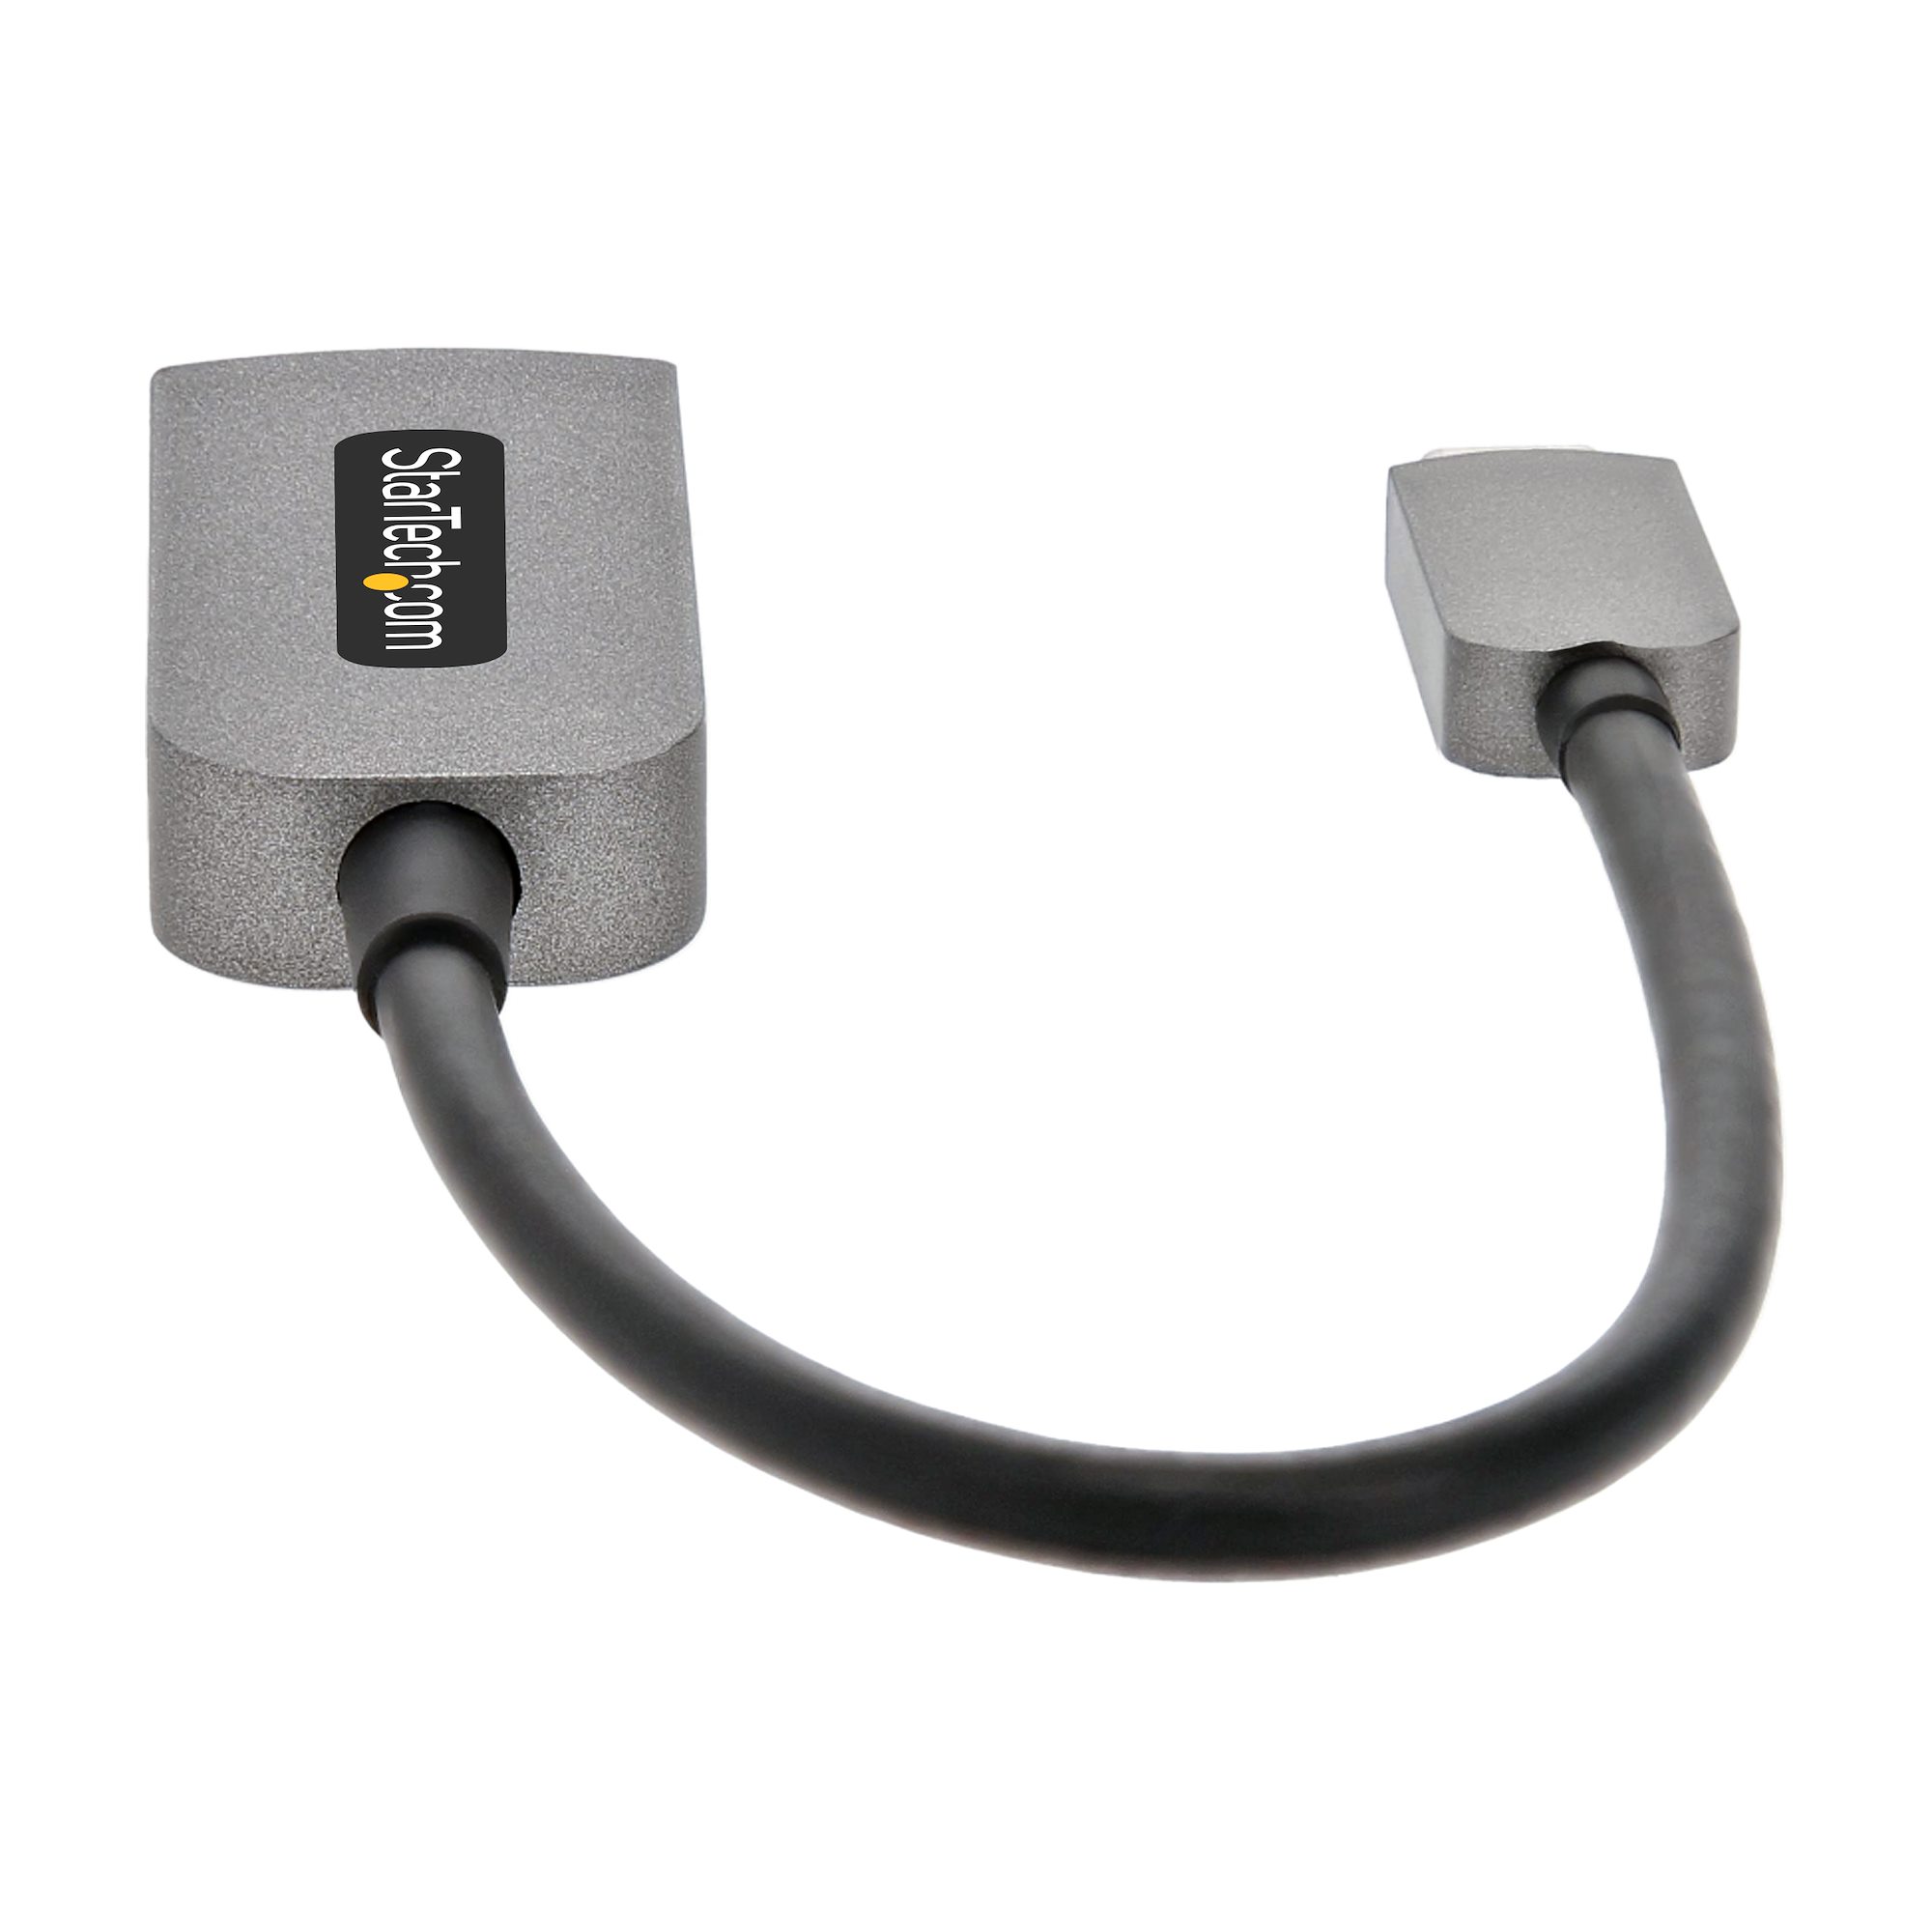 StarTech USB C to 4K HDMI Adapter - 4K 60Hz - Thunderbolt 3 Compatible  (CDP2HD4K60SA) desde 43,52 €